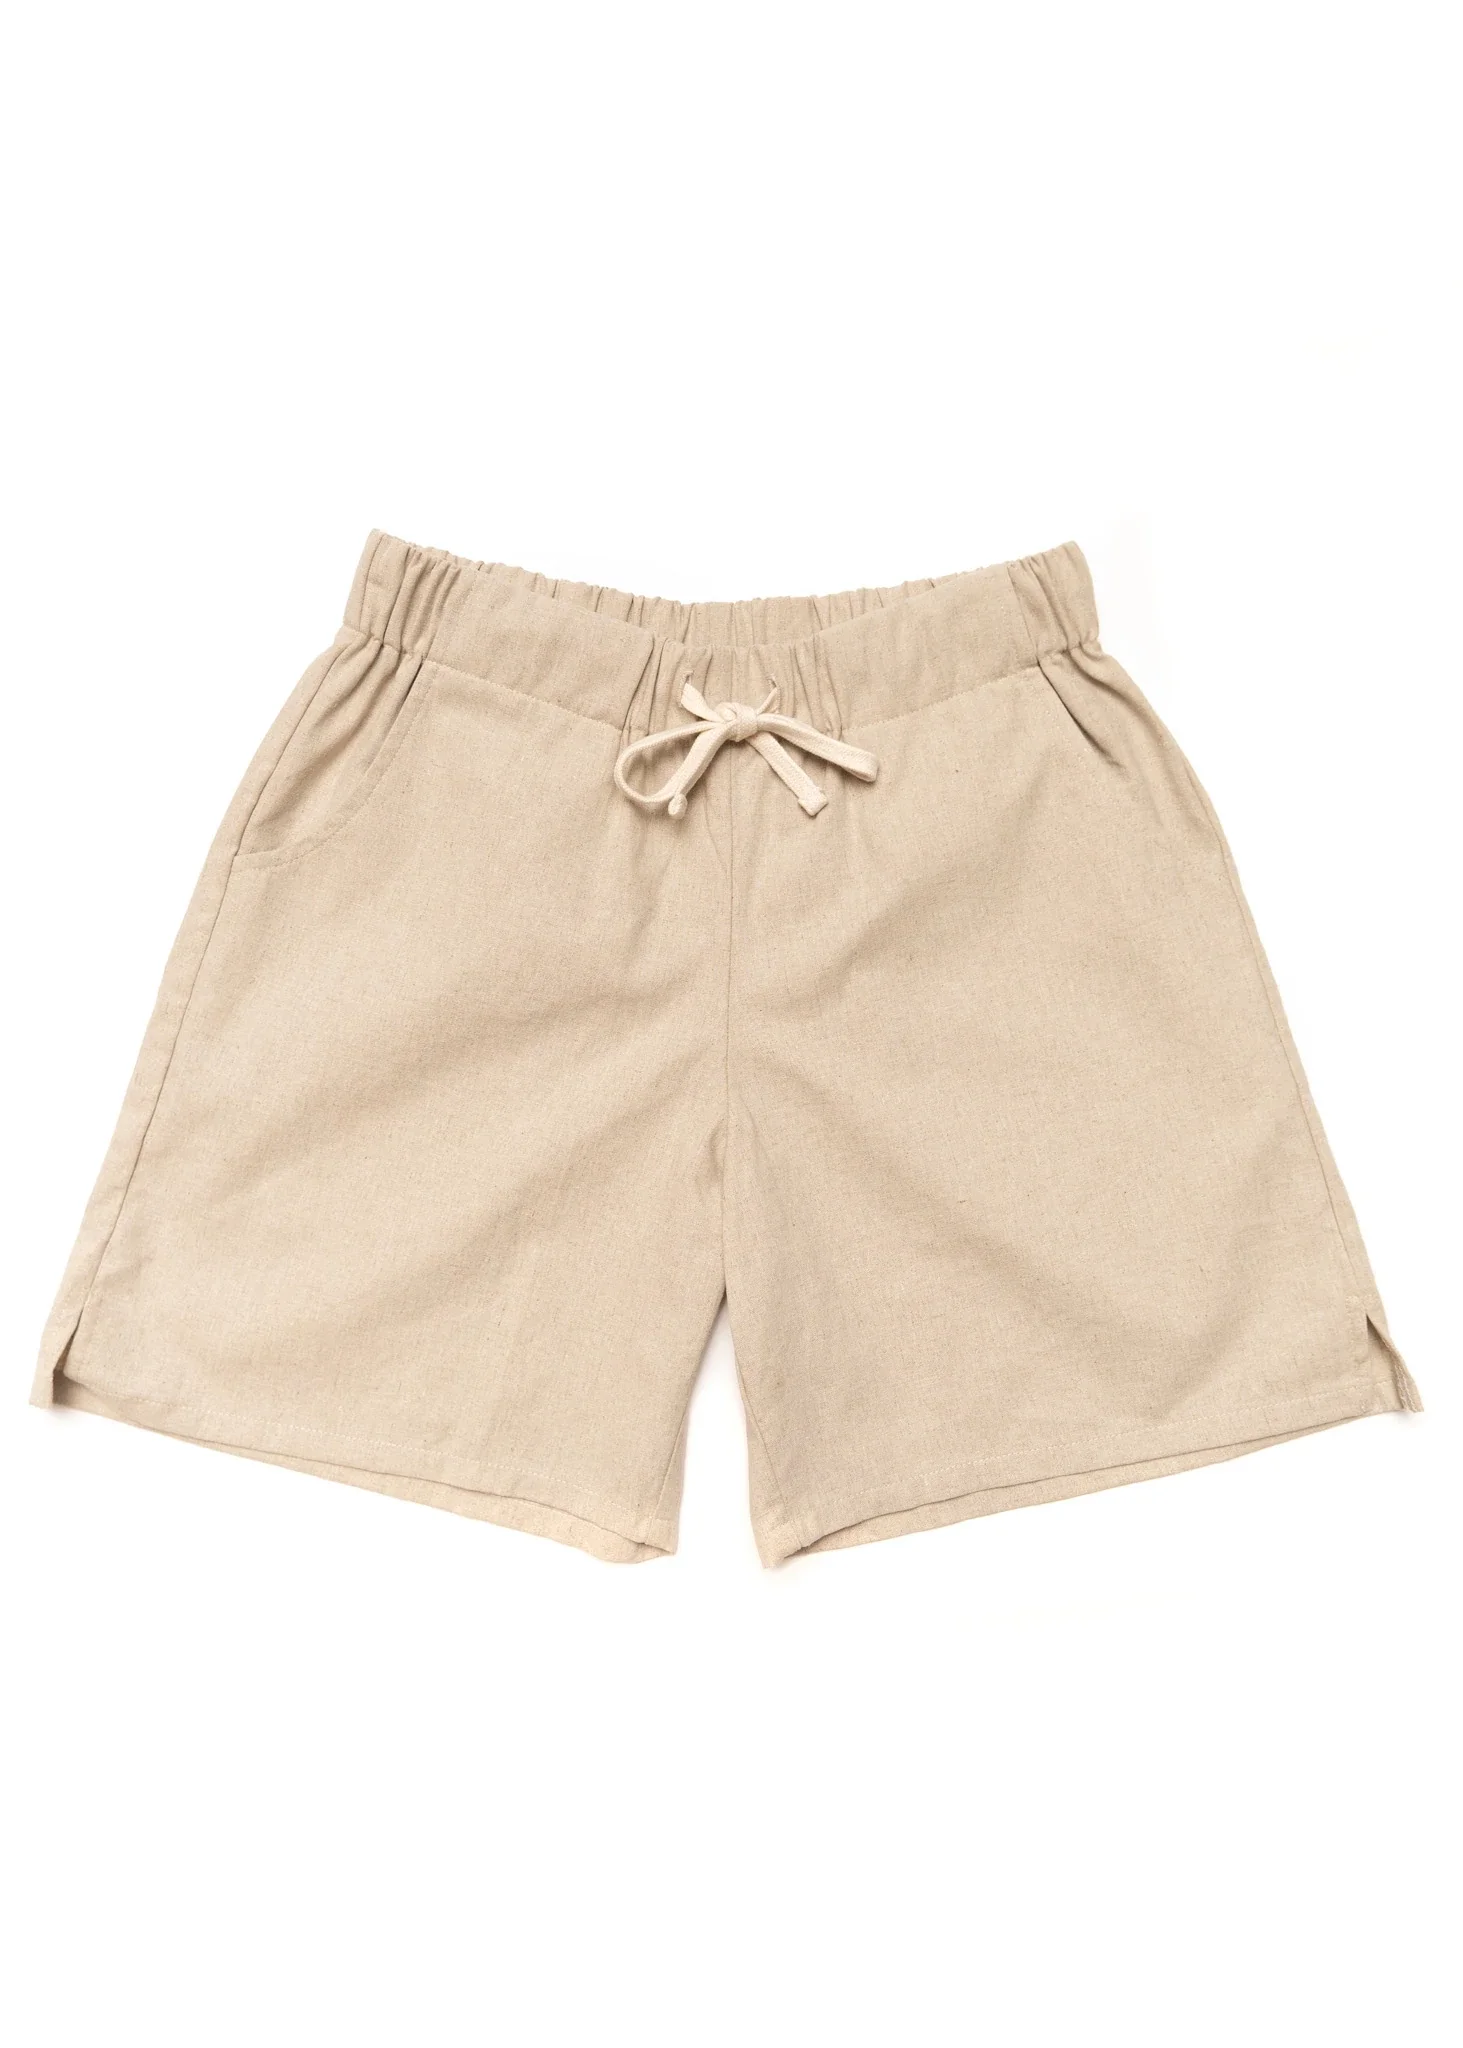 Image of Cotton Linen Shorts